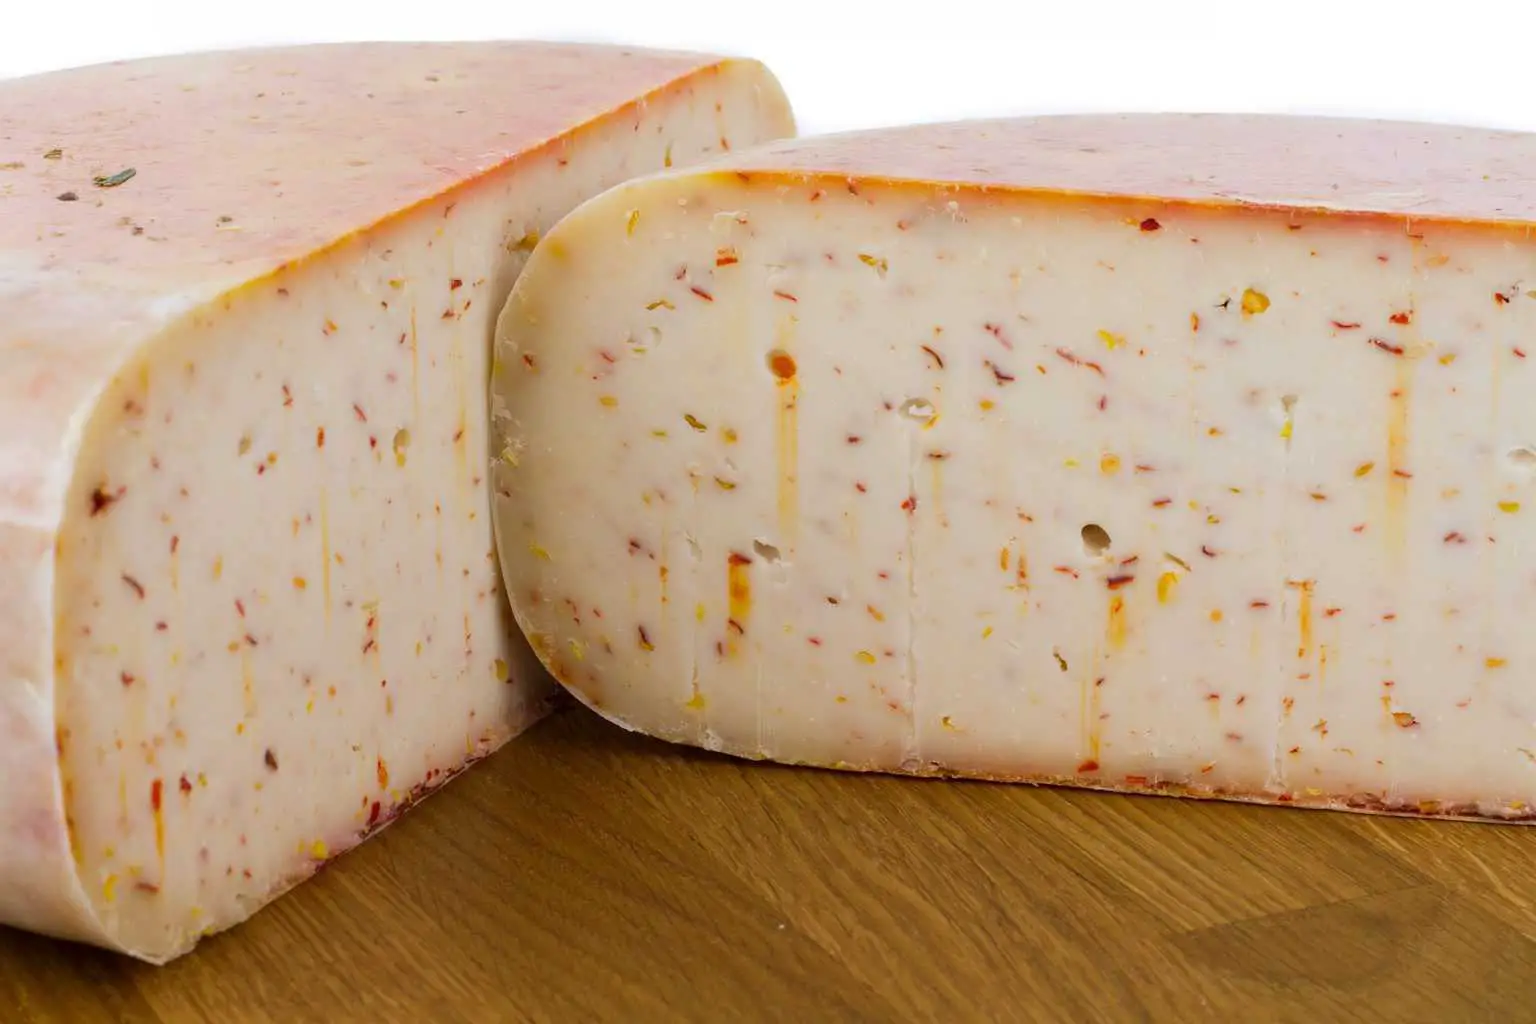 A circular bulk of goat cheese split in half